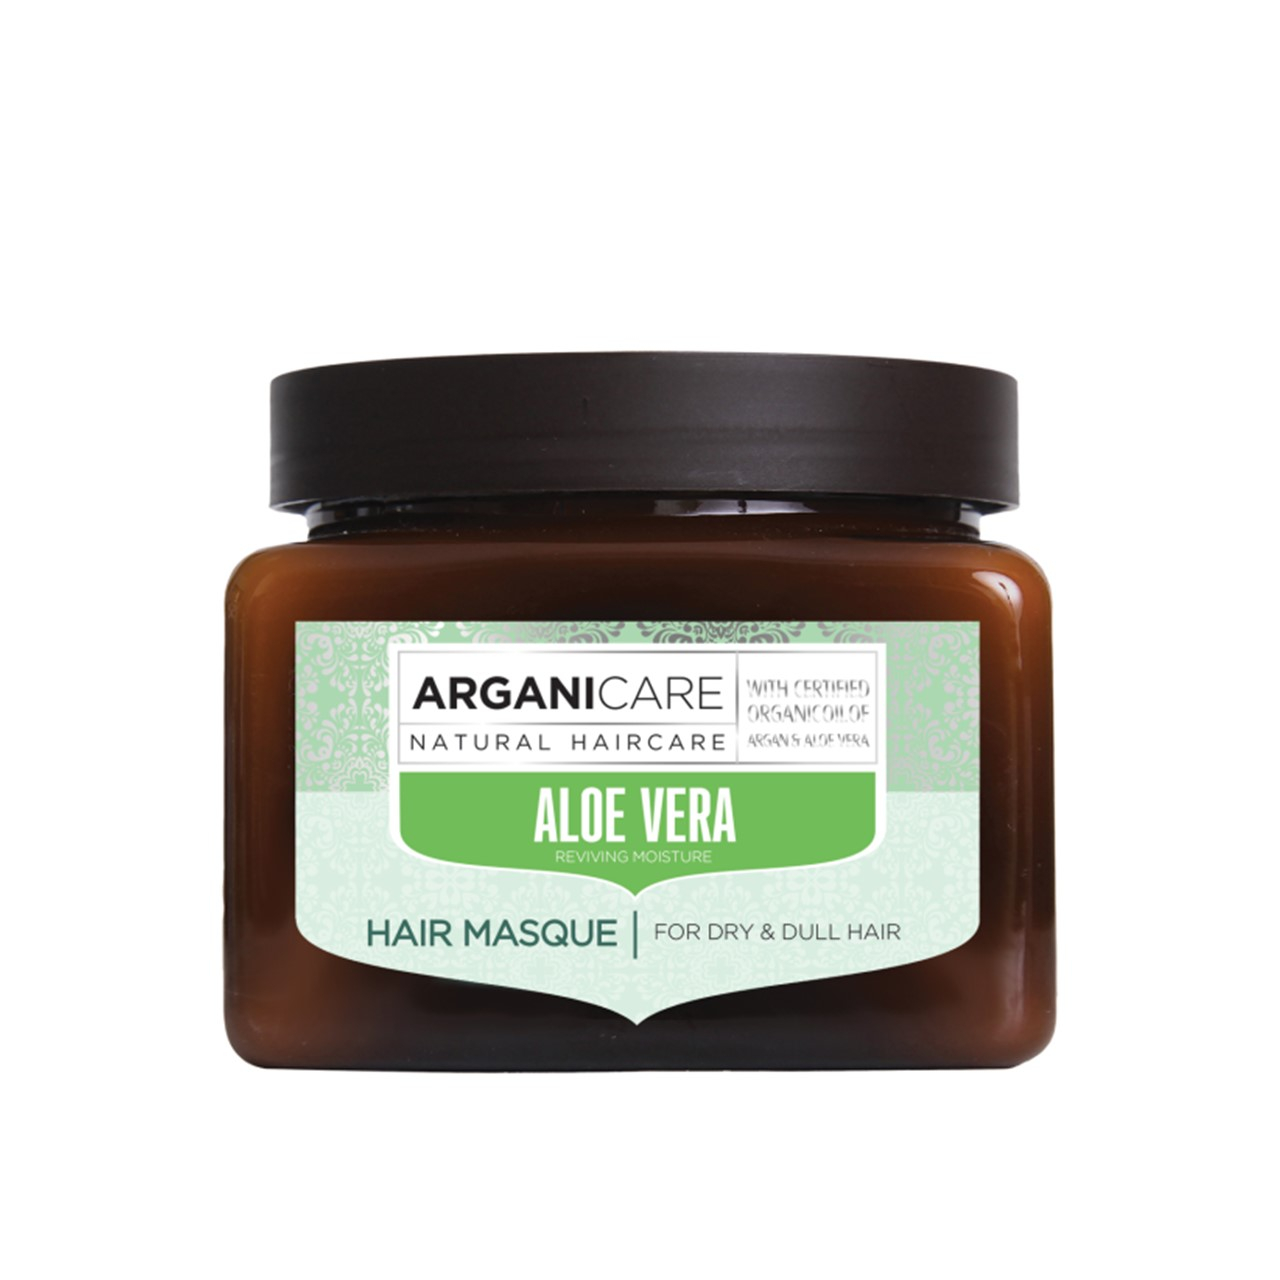 Arganicare Aloe Vera Hair Masque 500ml (16.9 fl oz)